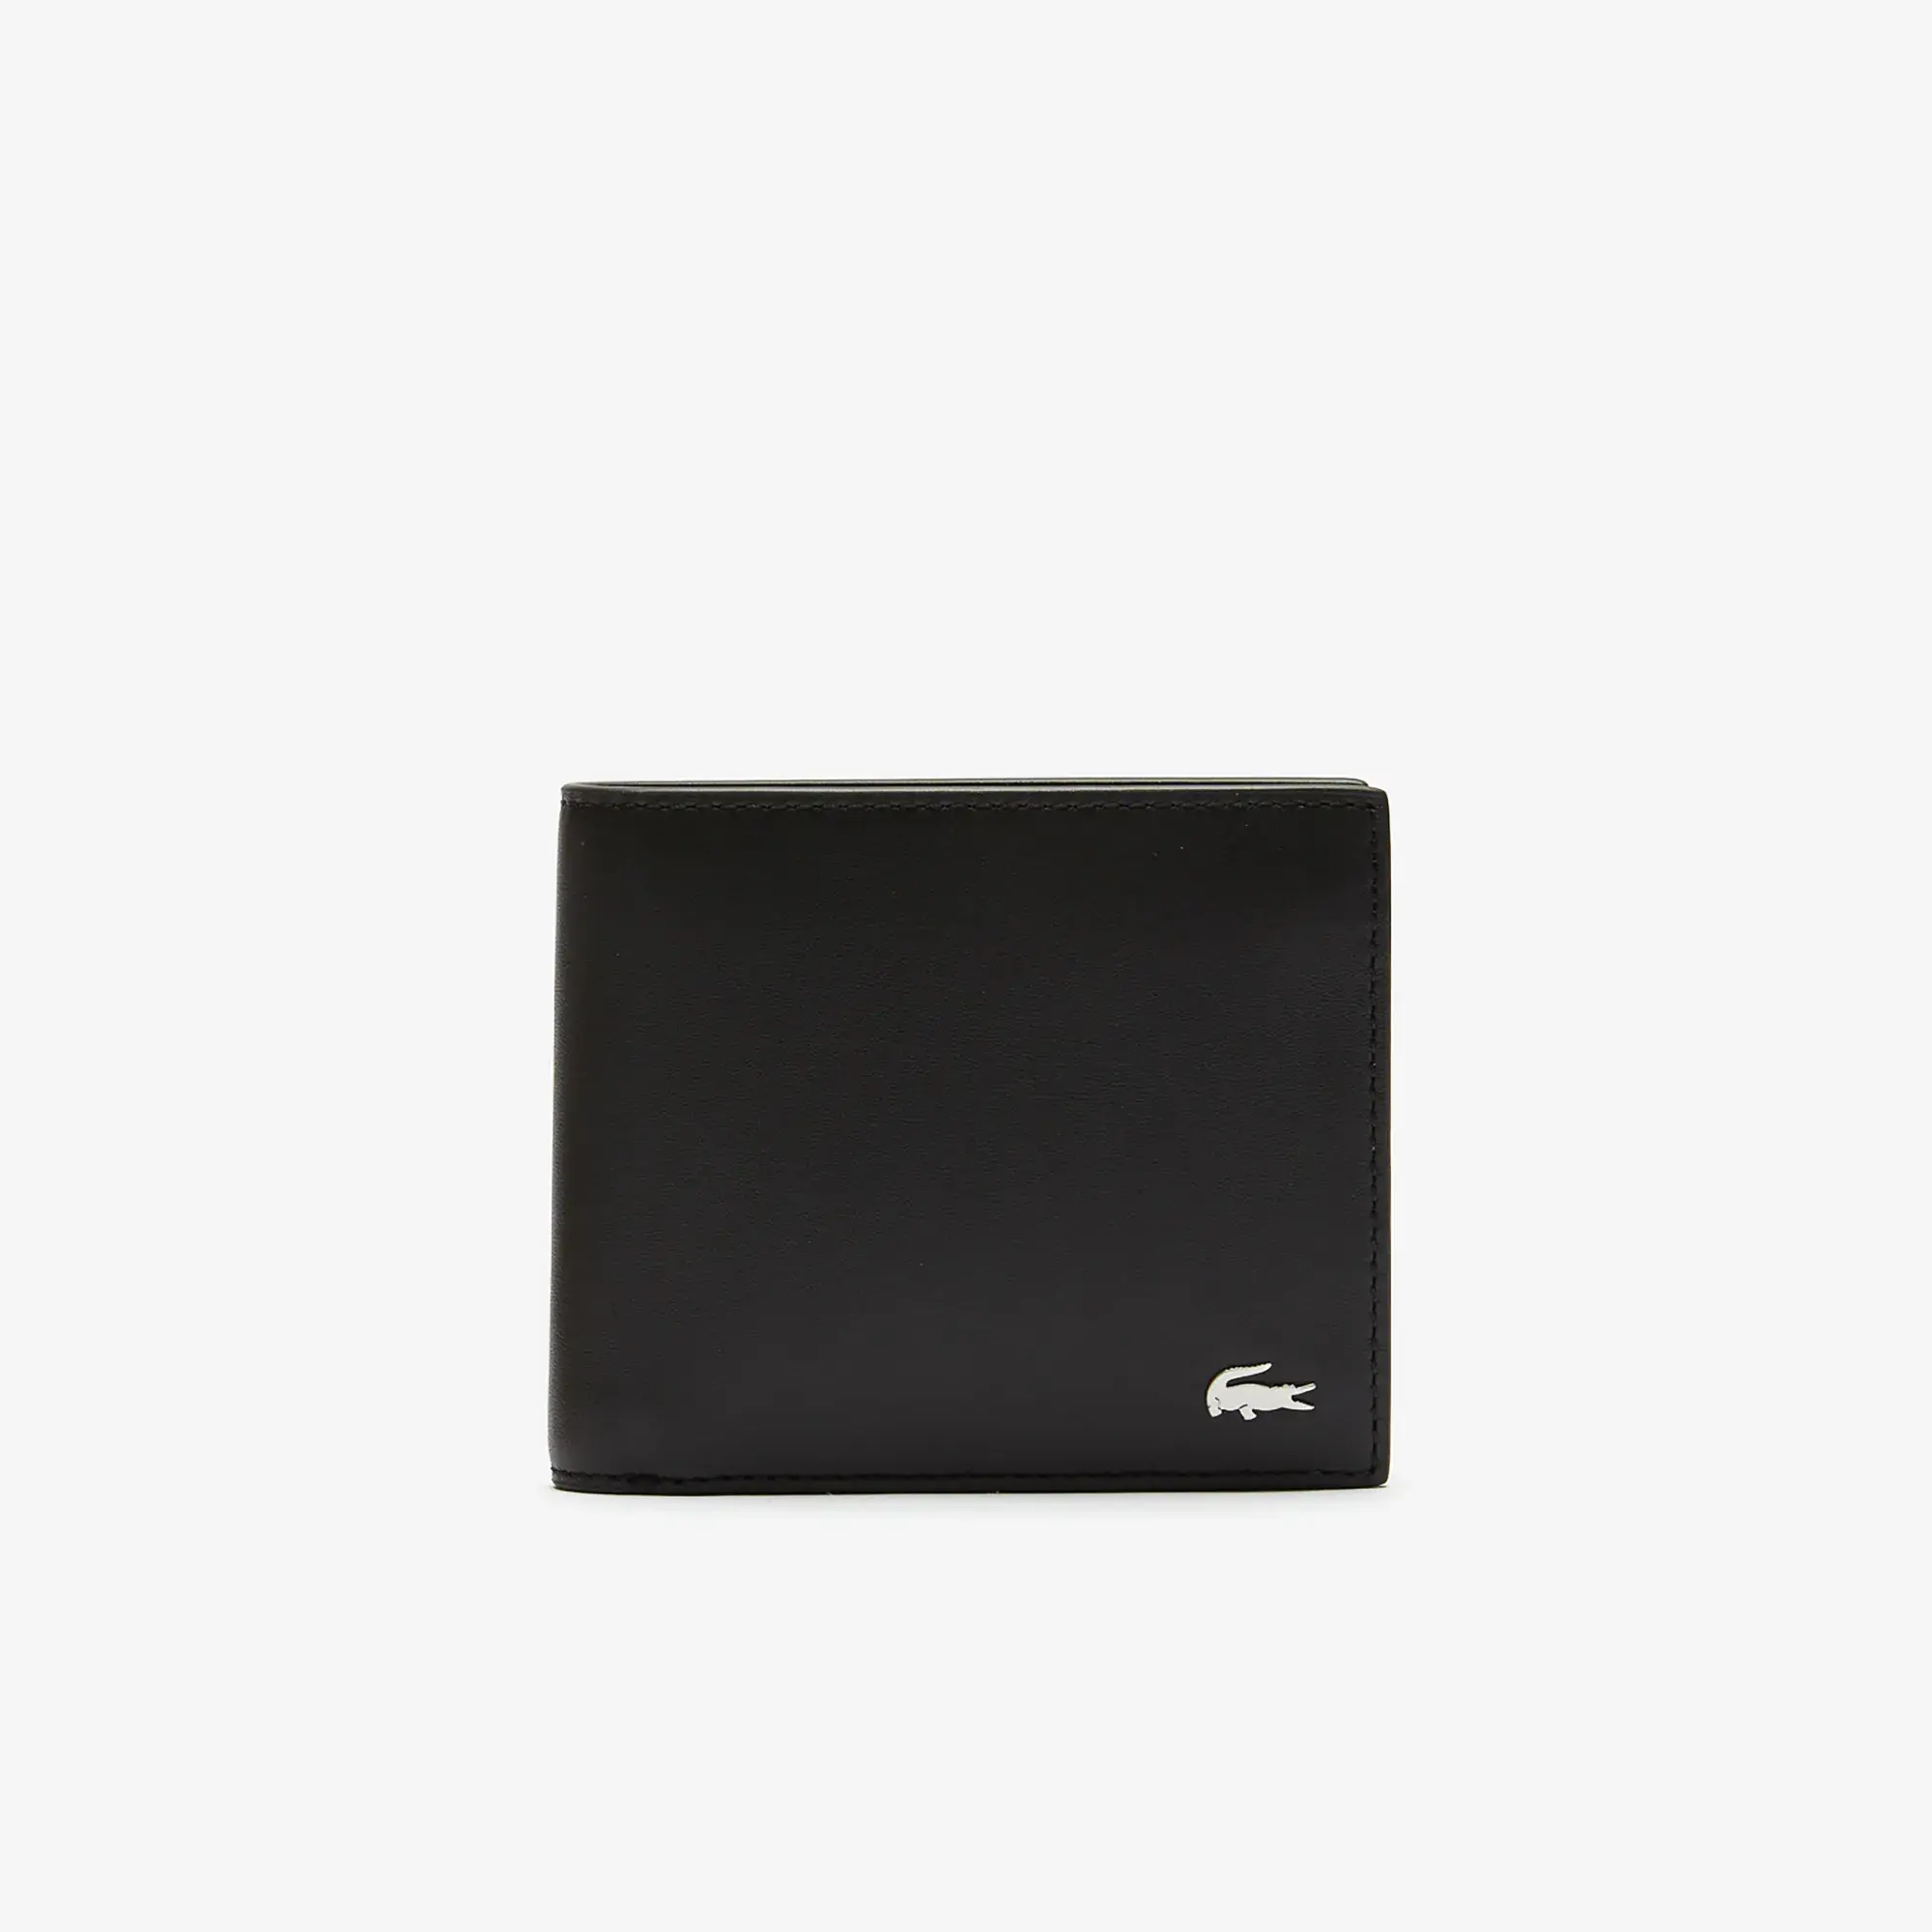 Lacoste Men's Fitzgerald Leather Wallet. 1